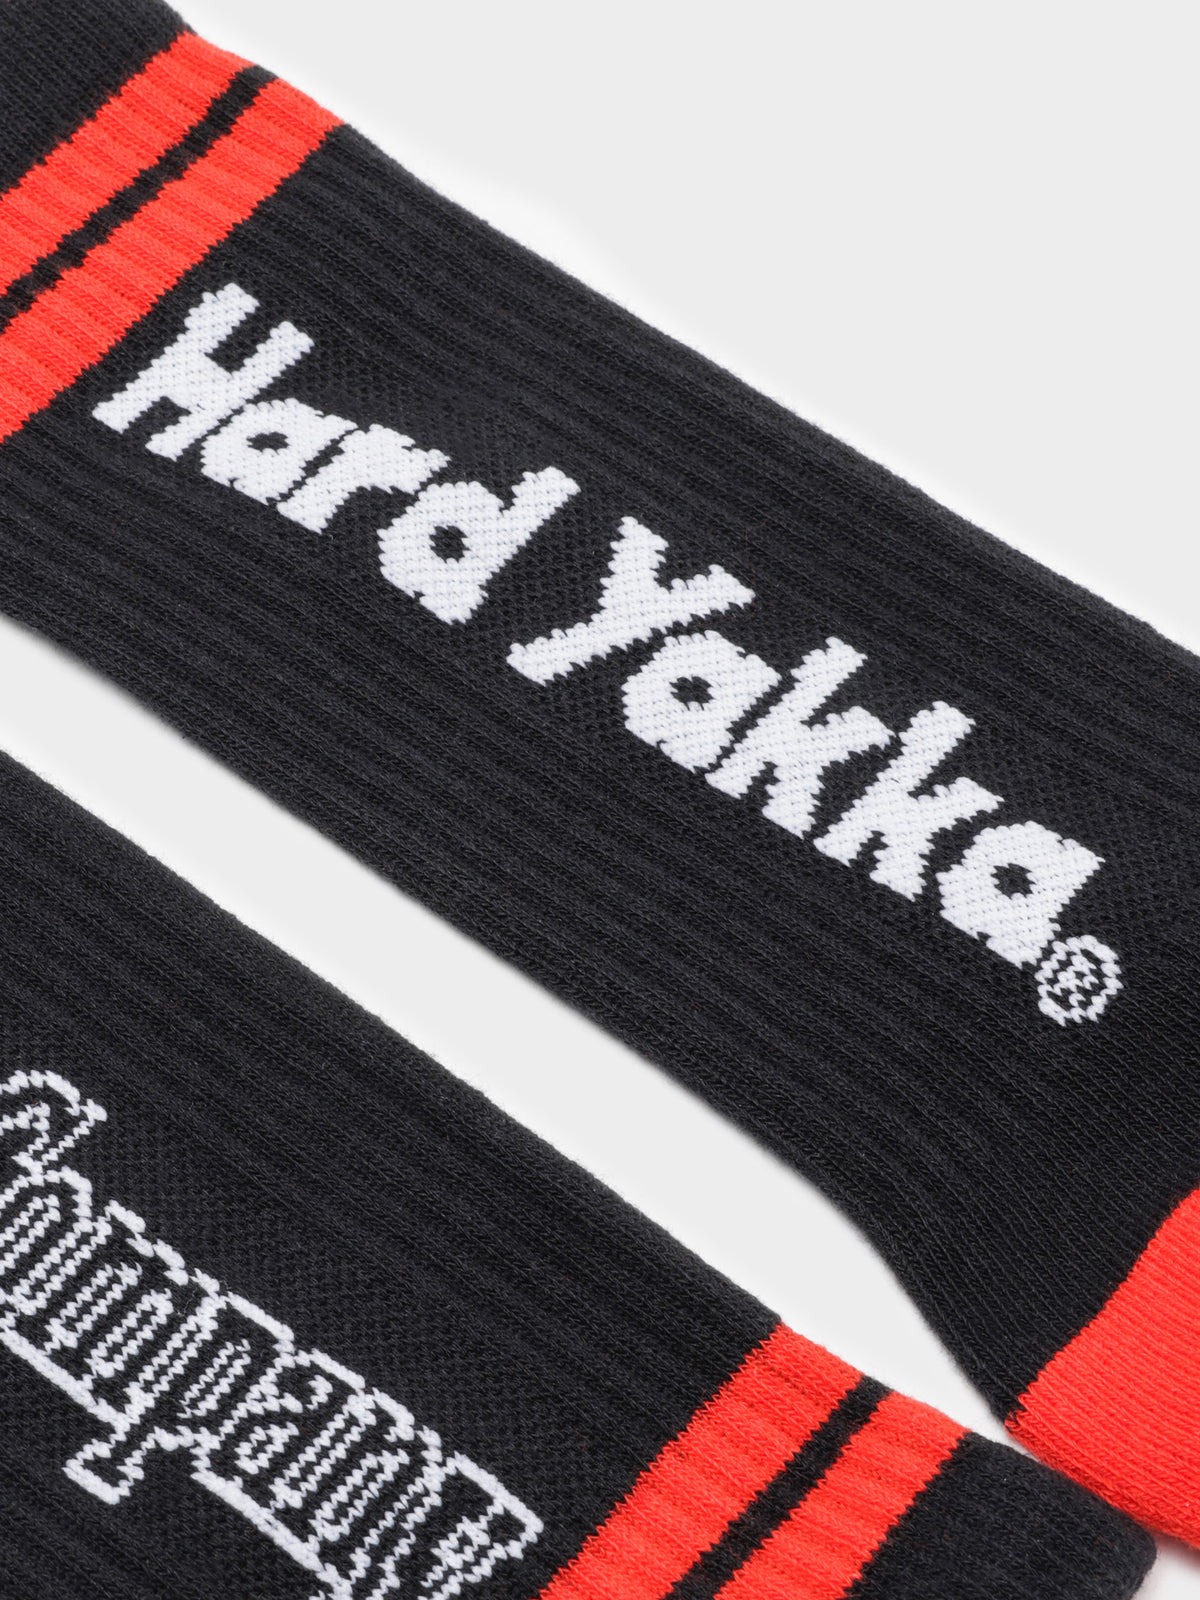 One Pair of Hard Yakka x Thrills Crew Socks in Black &amp; Red